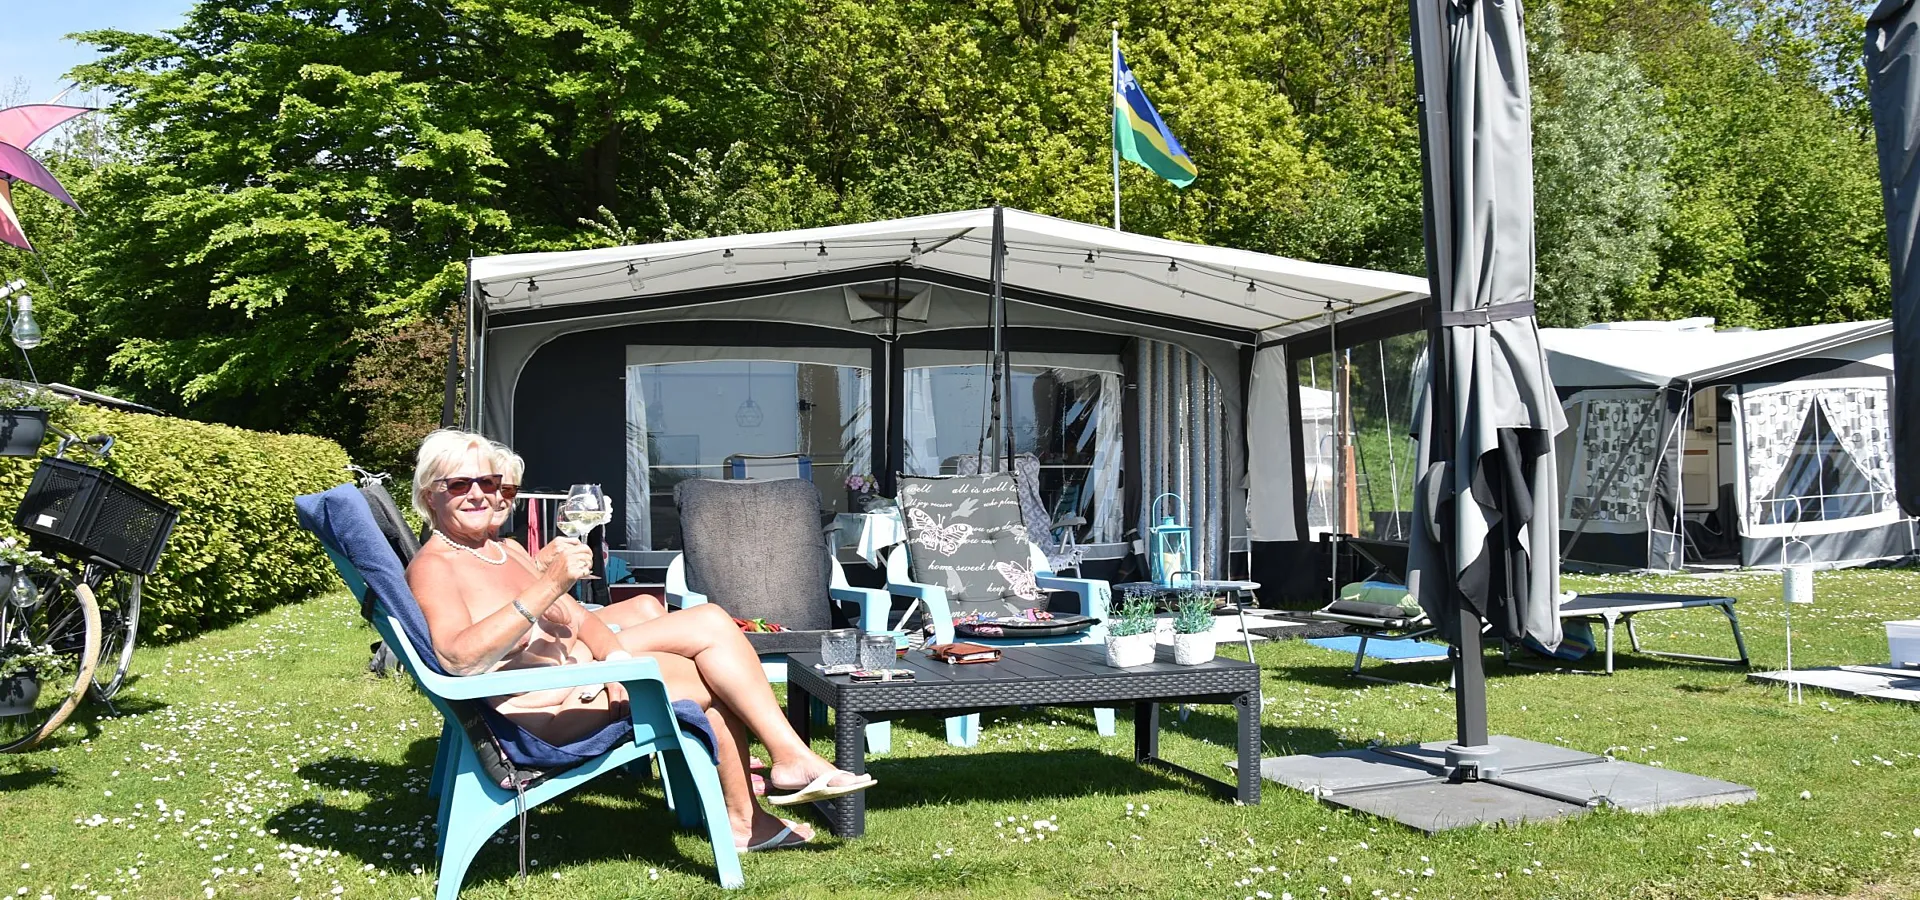 Naturist camping Netherlands season site 1